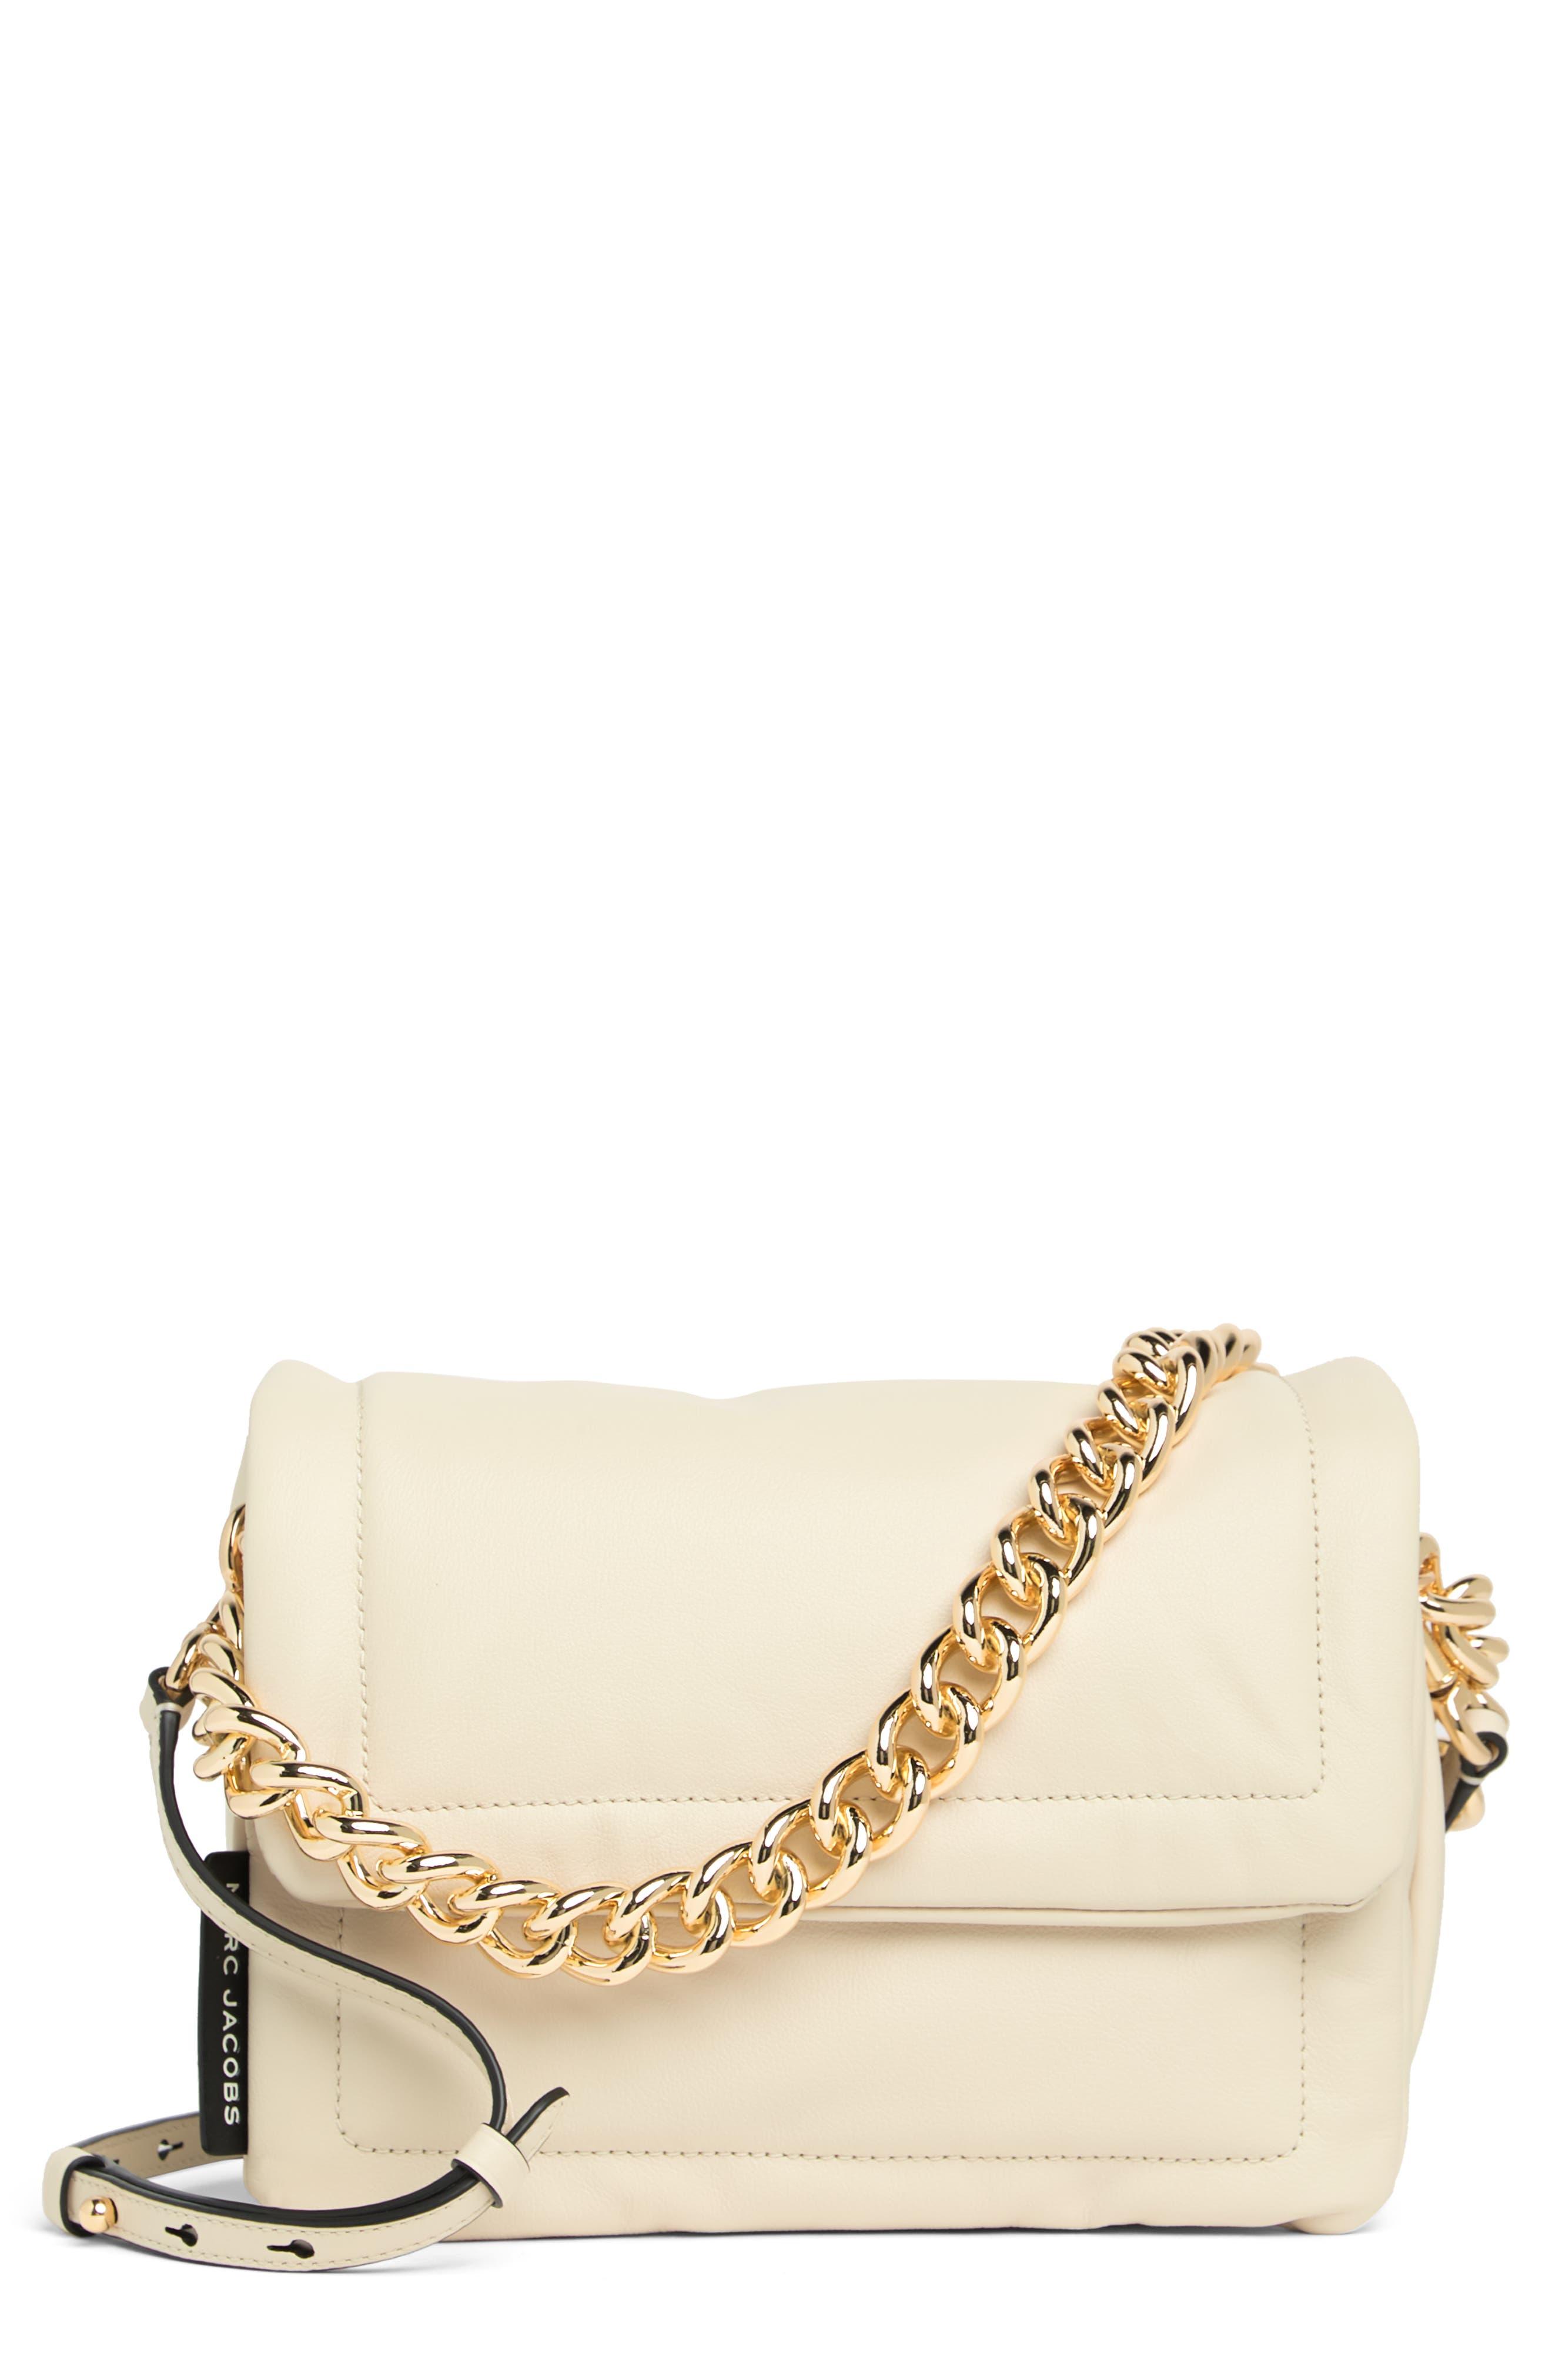 Nordstrom Rack Marc Jacobs Pillow Leather Crossbody Bag $244.97